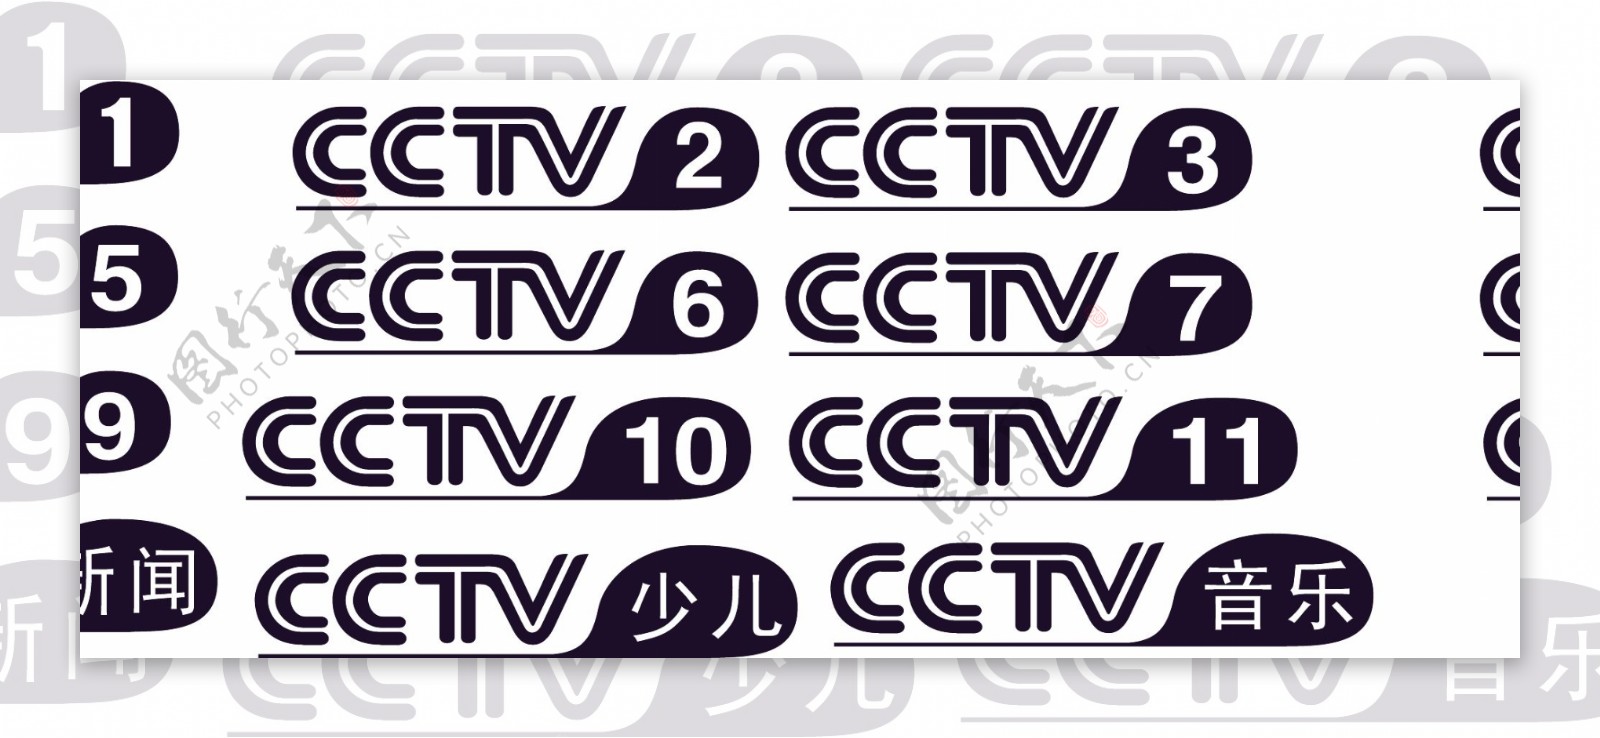 CCTV标志图片